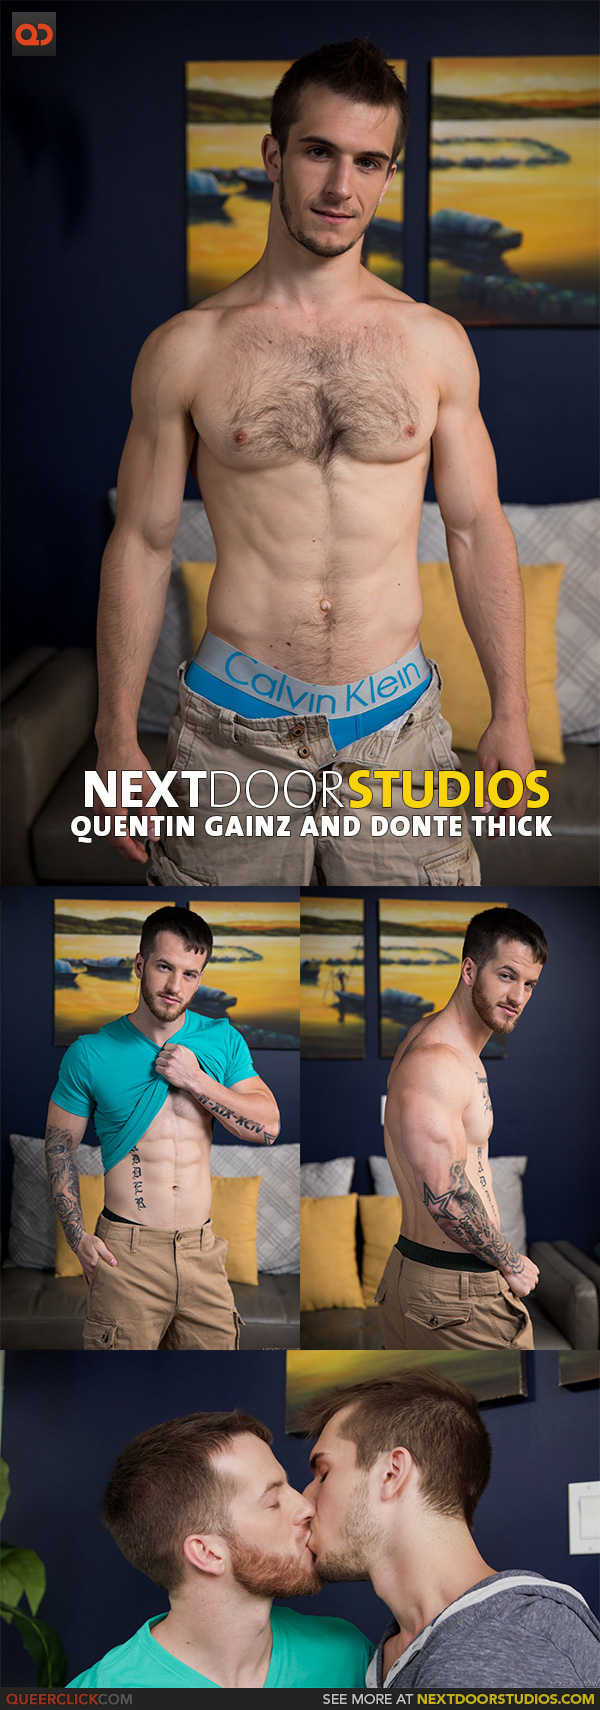 Next Door Studios:  Quentin Gainz and Donte Thick